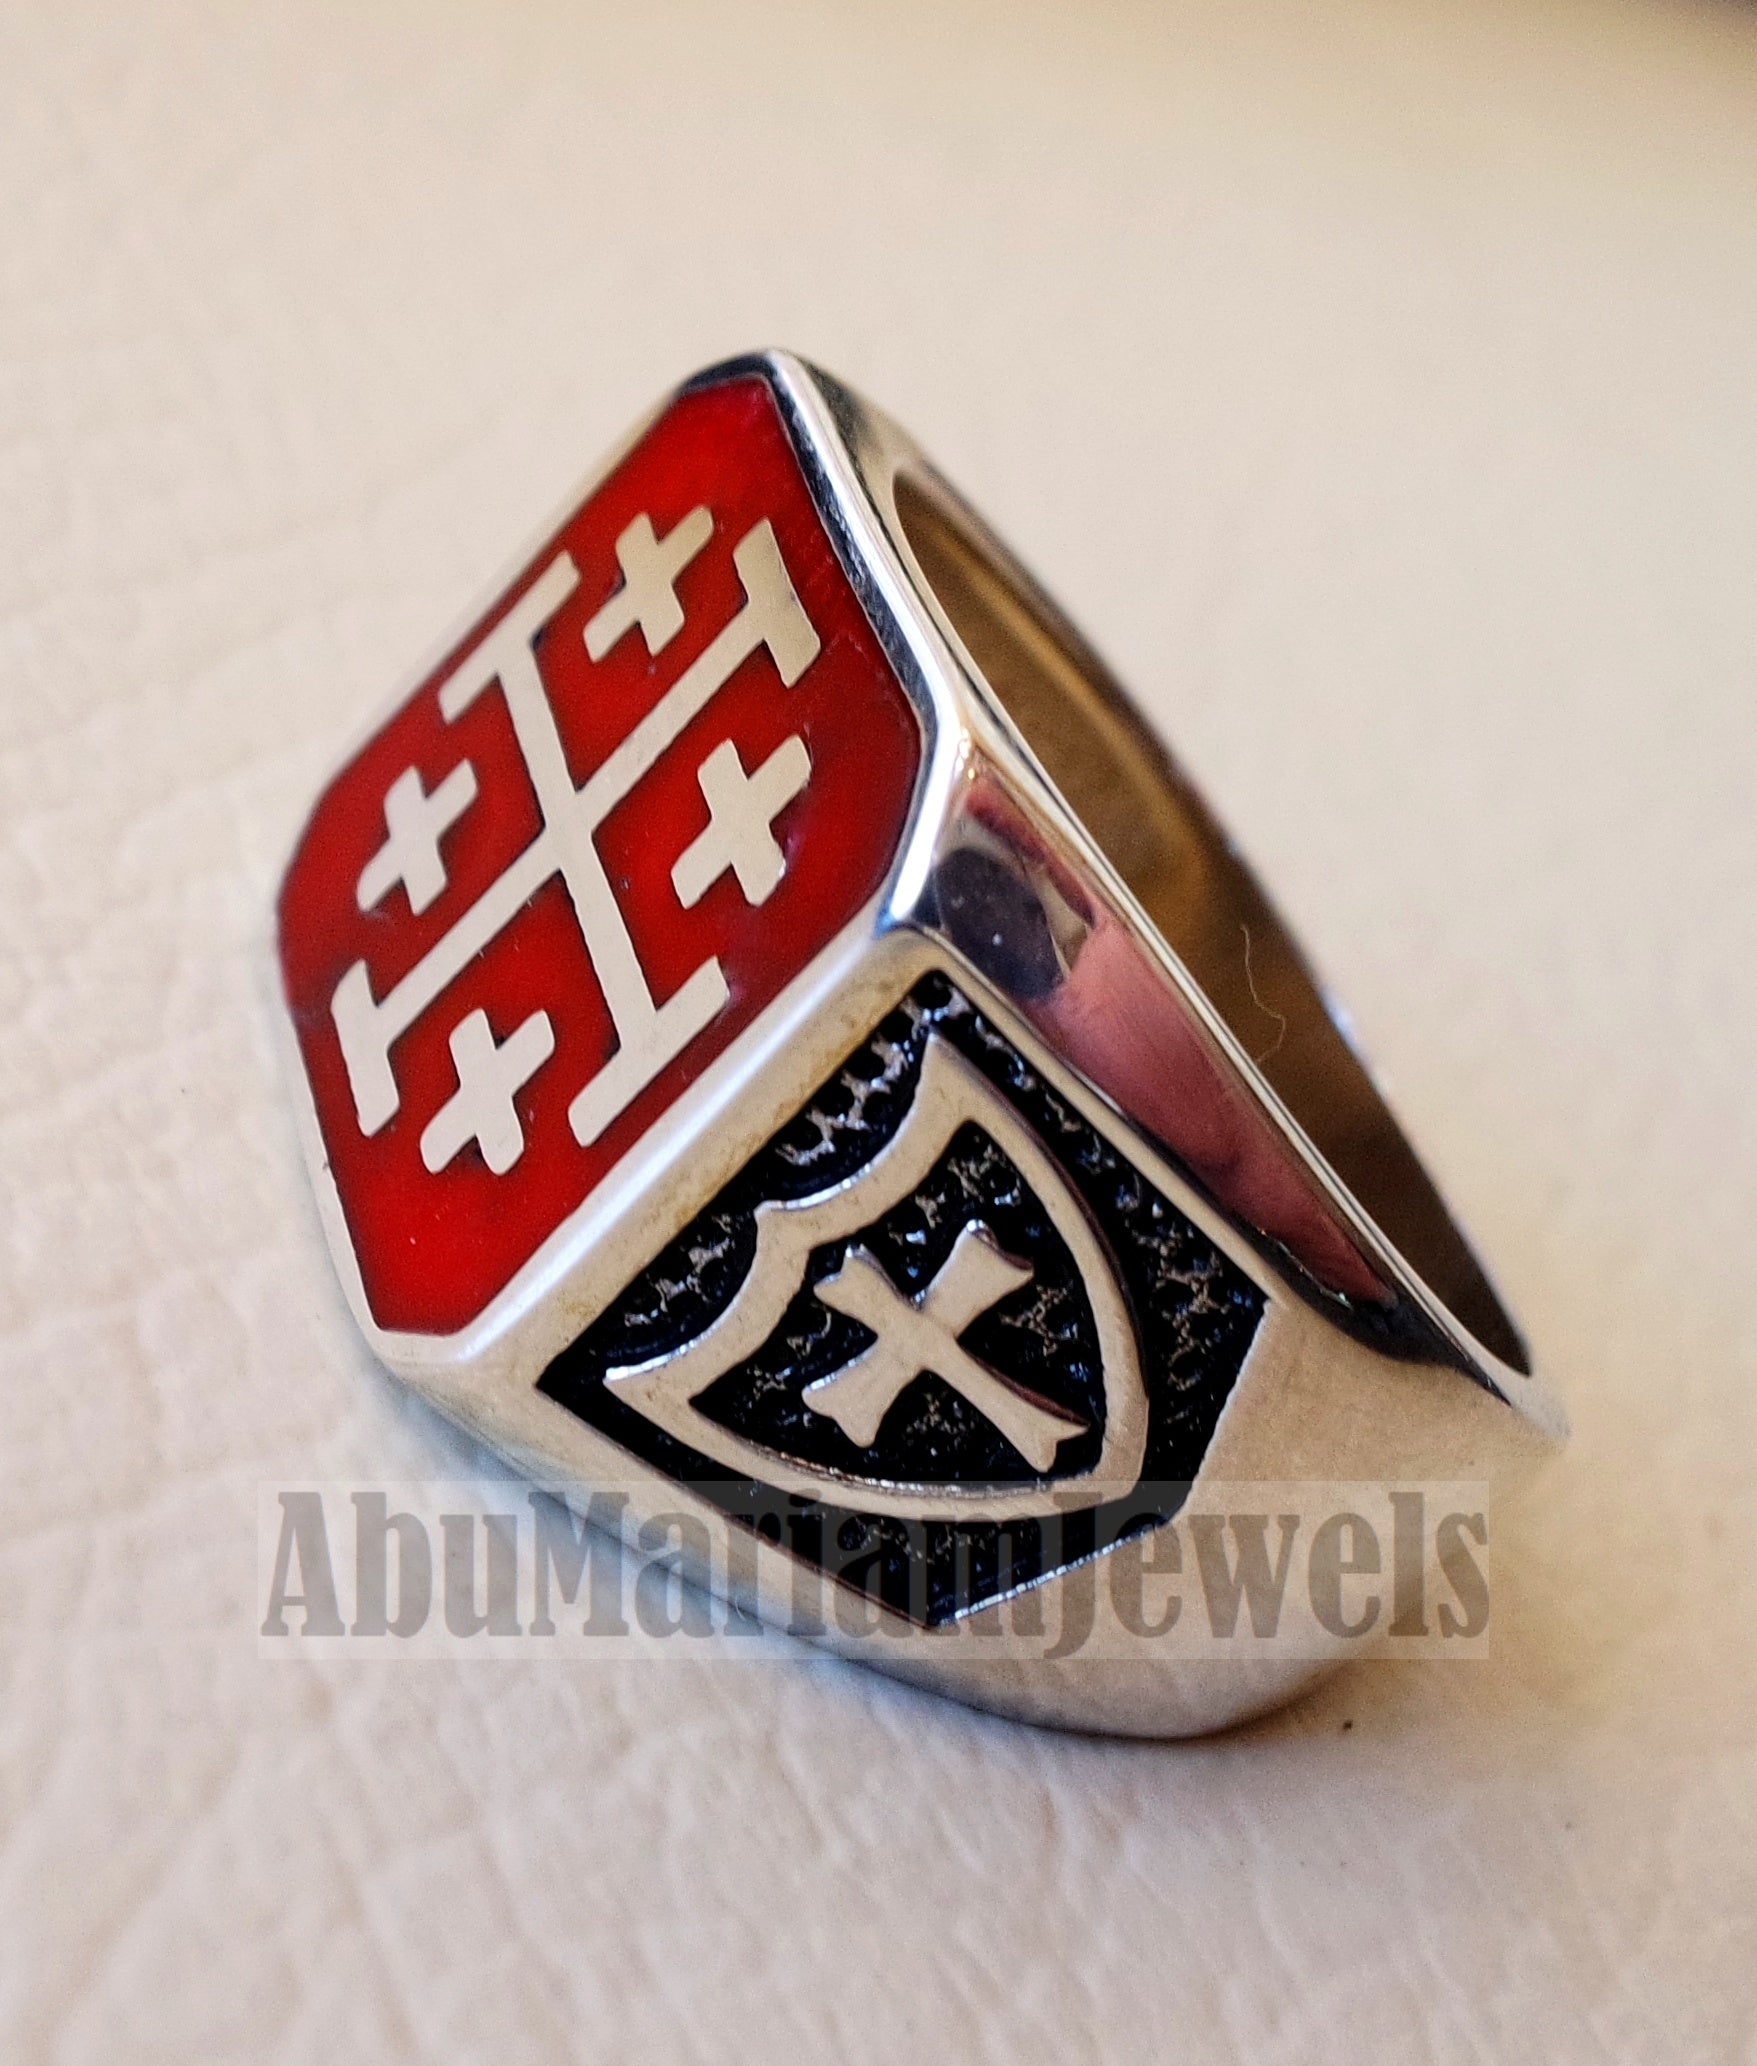 Jerusalem Cross ring christ christian symbol sterling silver 925 red enamel man gift jewelry fast shipping square shape Catholic Orthodox